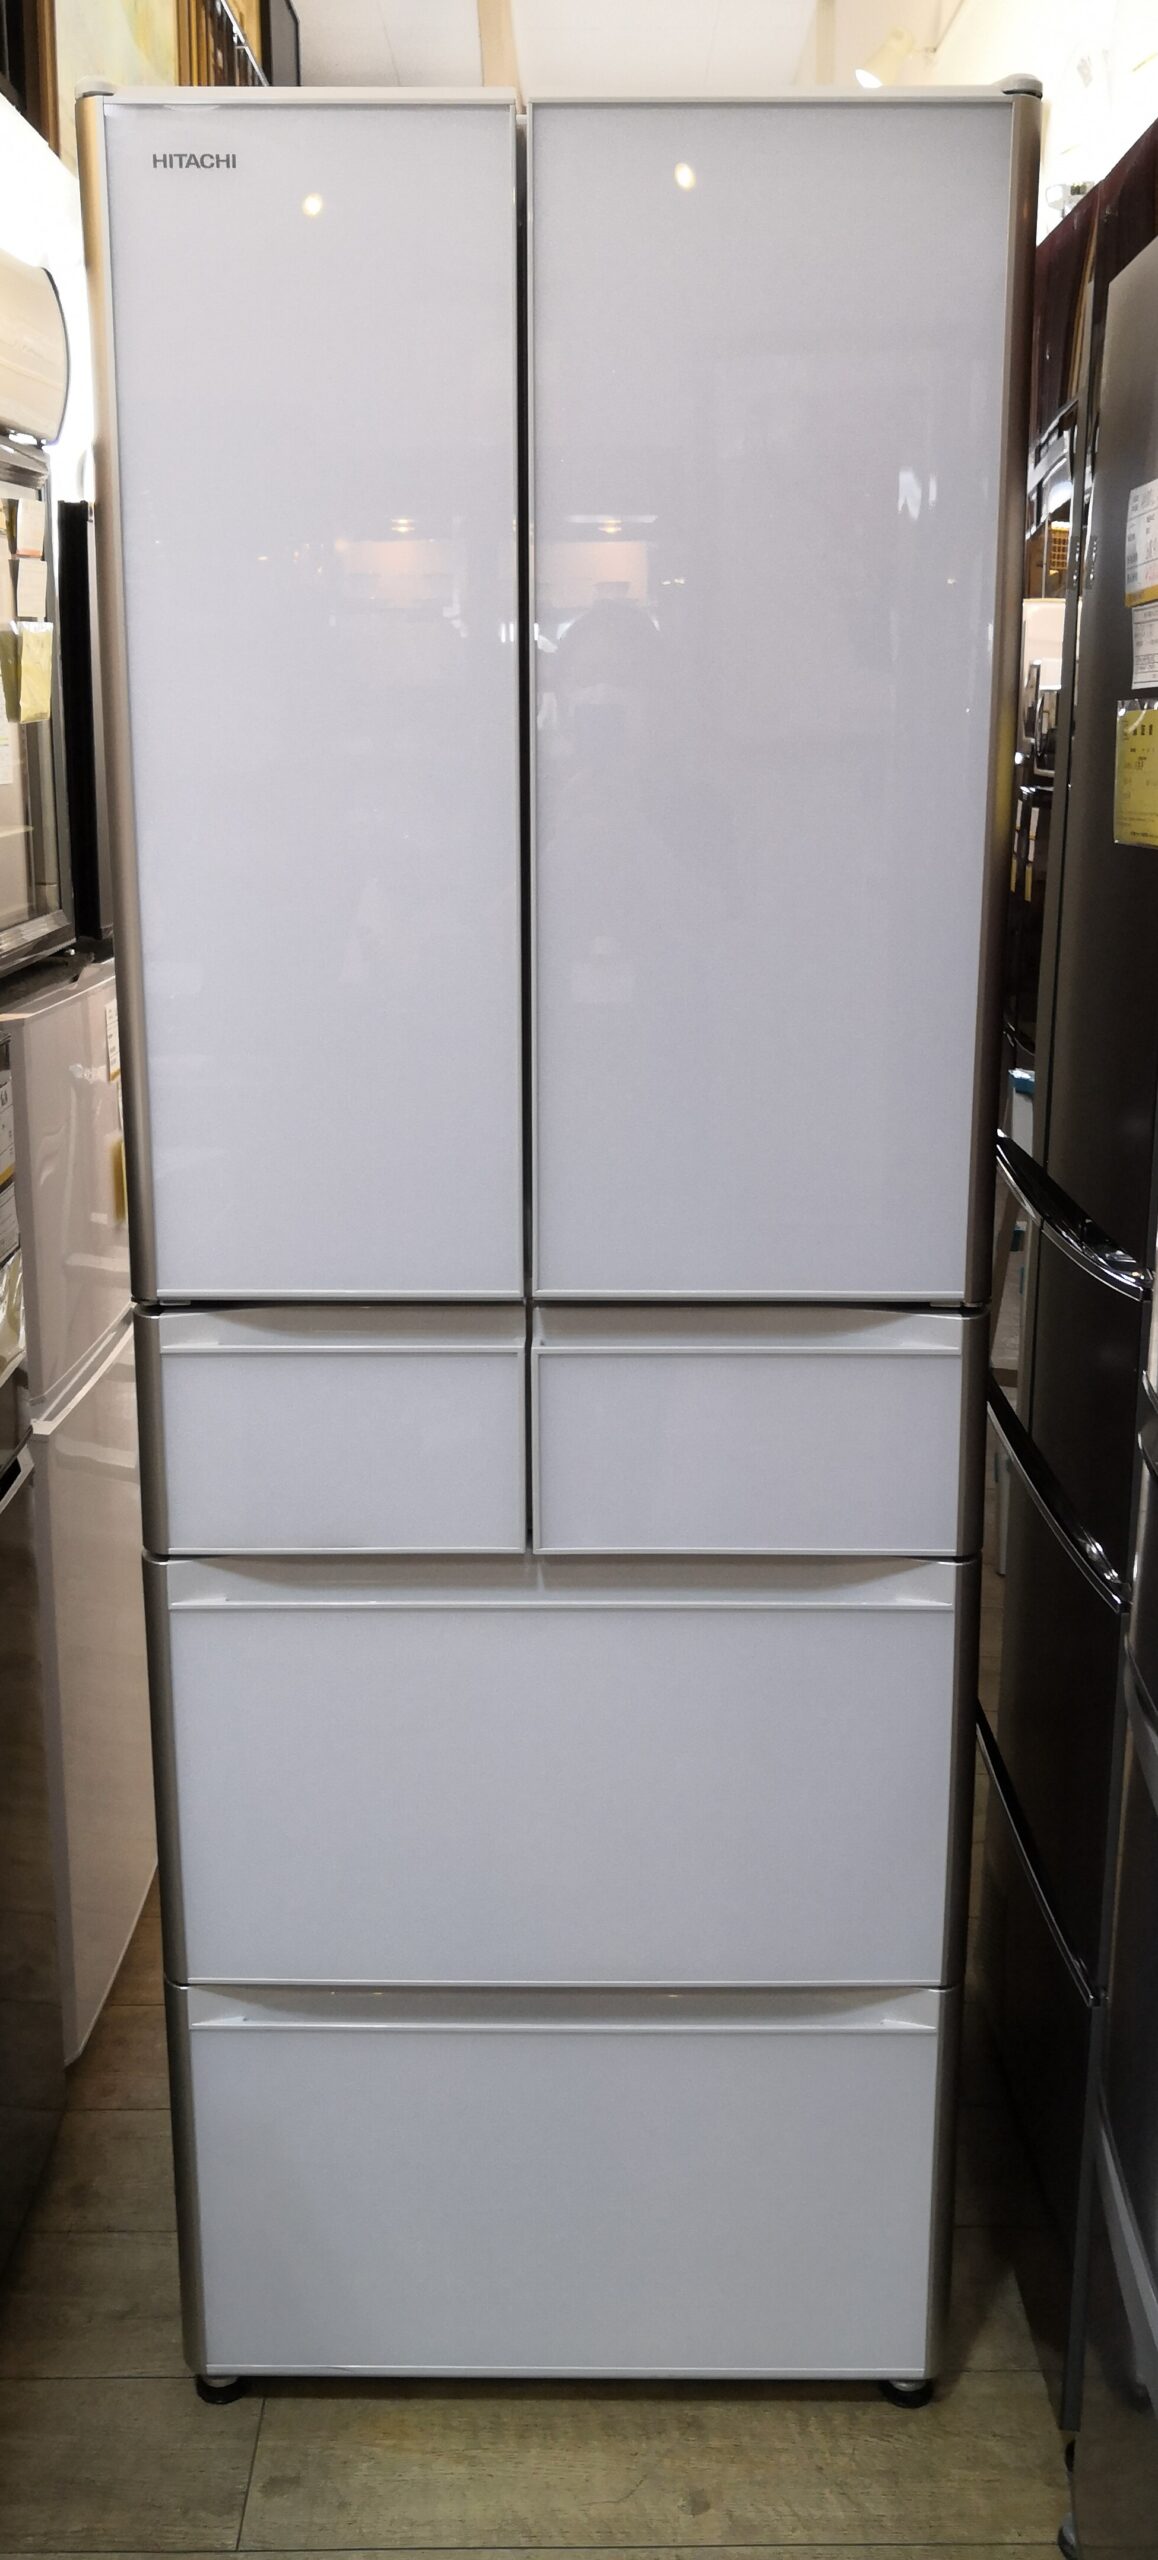 HITACHI 日立 2019年製 R-XG43K 真空チルド 430L 冷凍冷蔵庫 冷蔵庫 